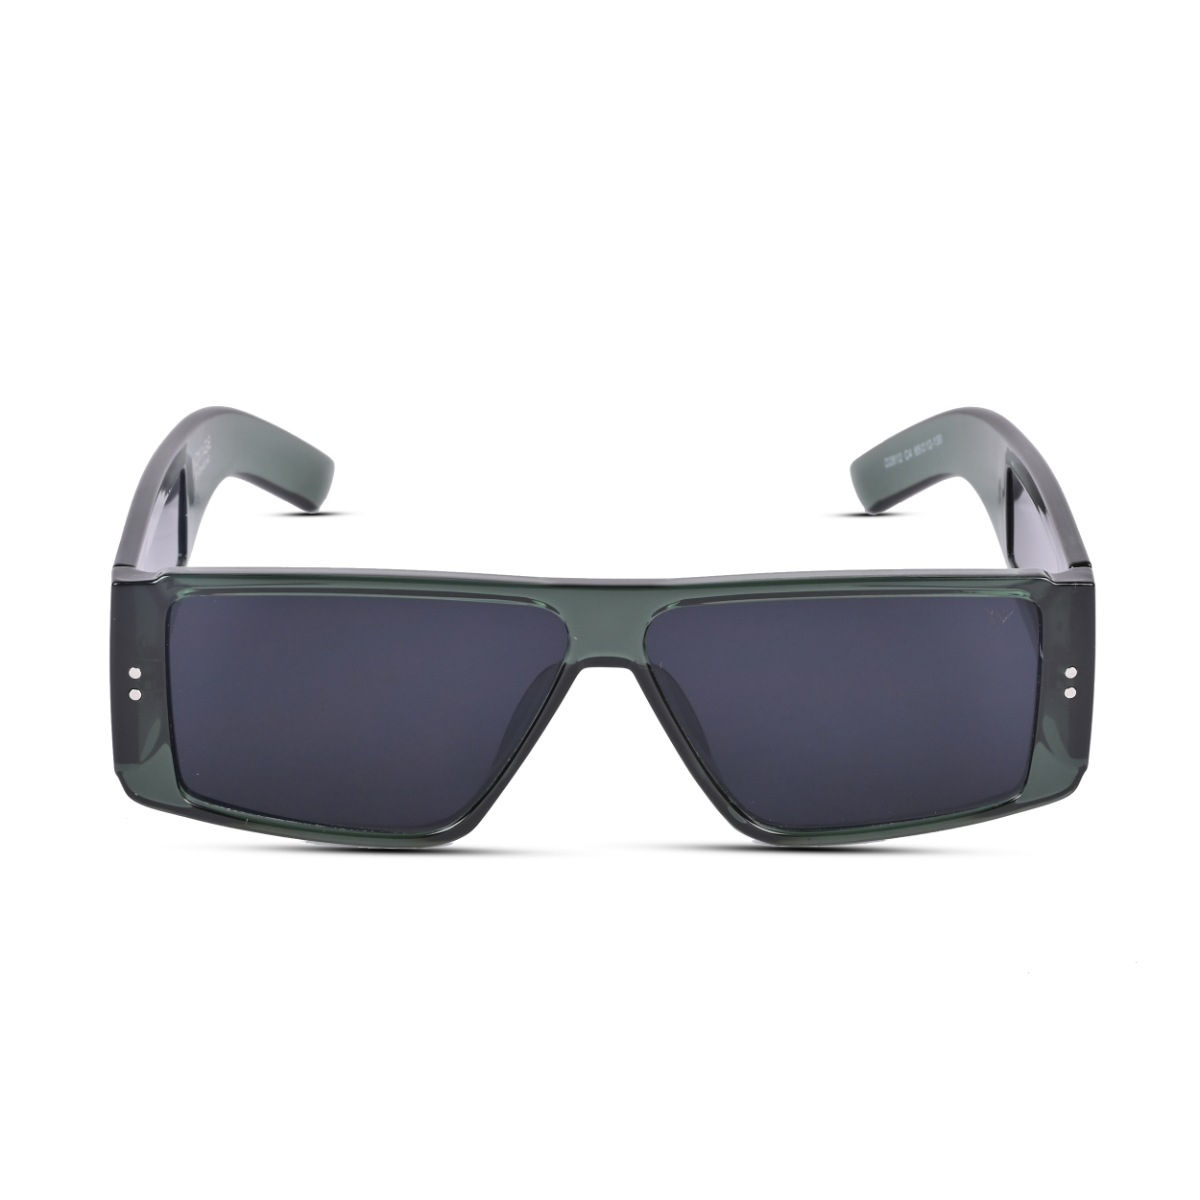 Buy Voyage Black Wayfarer Sunglasses for Unisex (2812MG3707) Online